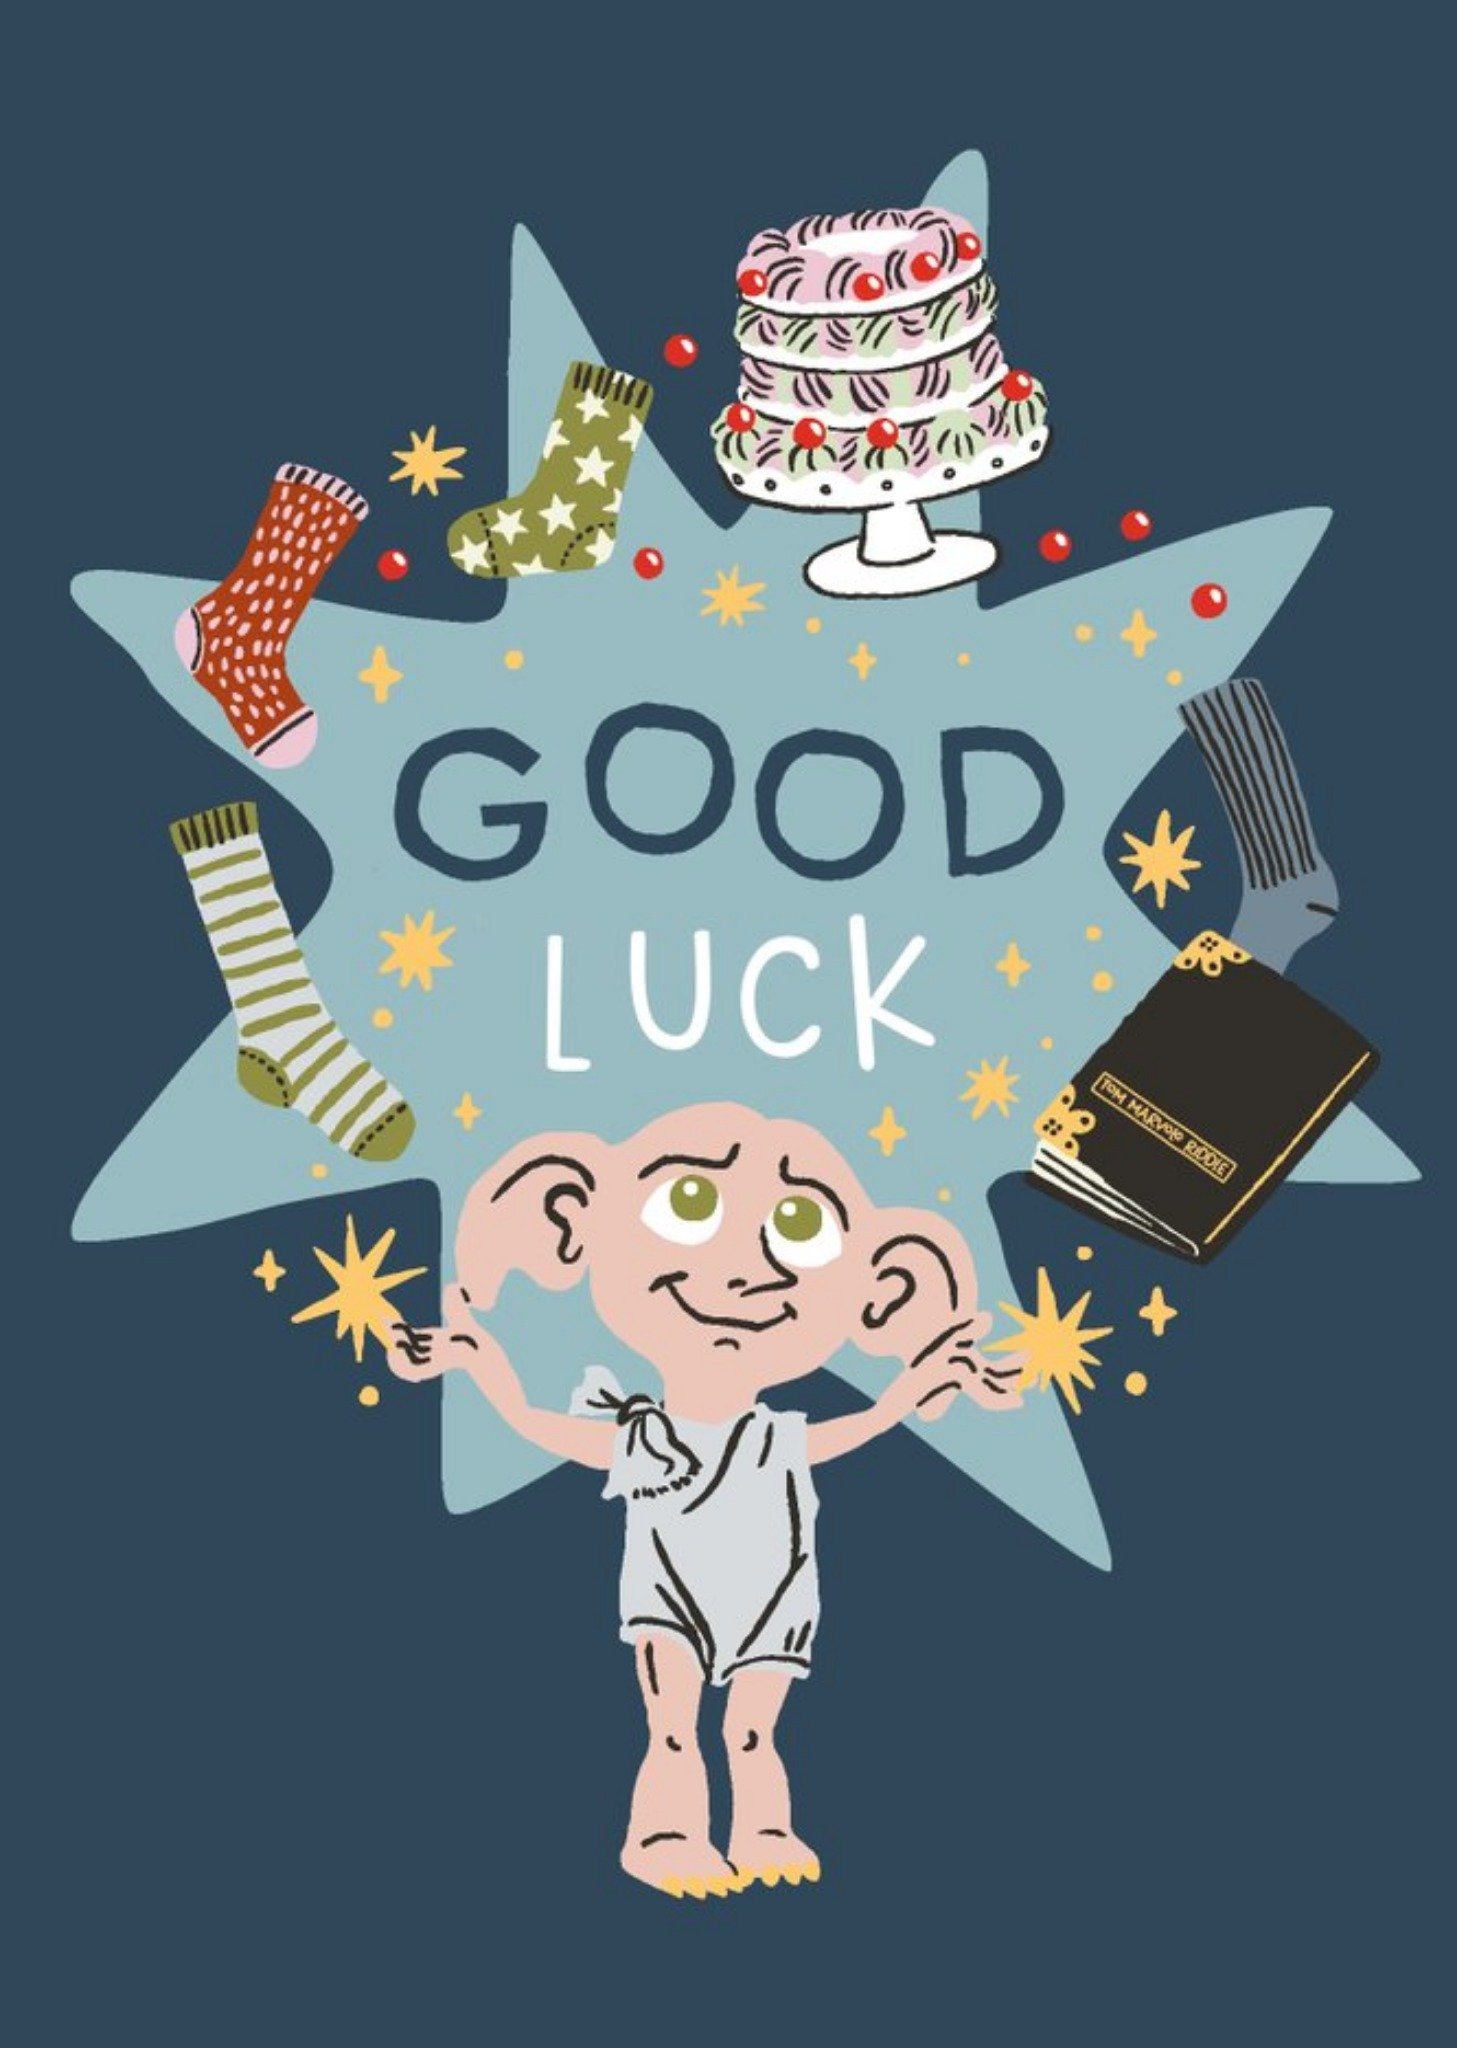 Harry Potter Dobby The House Elf Illustrated Good Luck Card Ecard